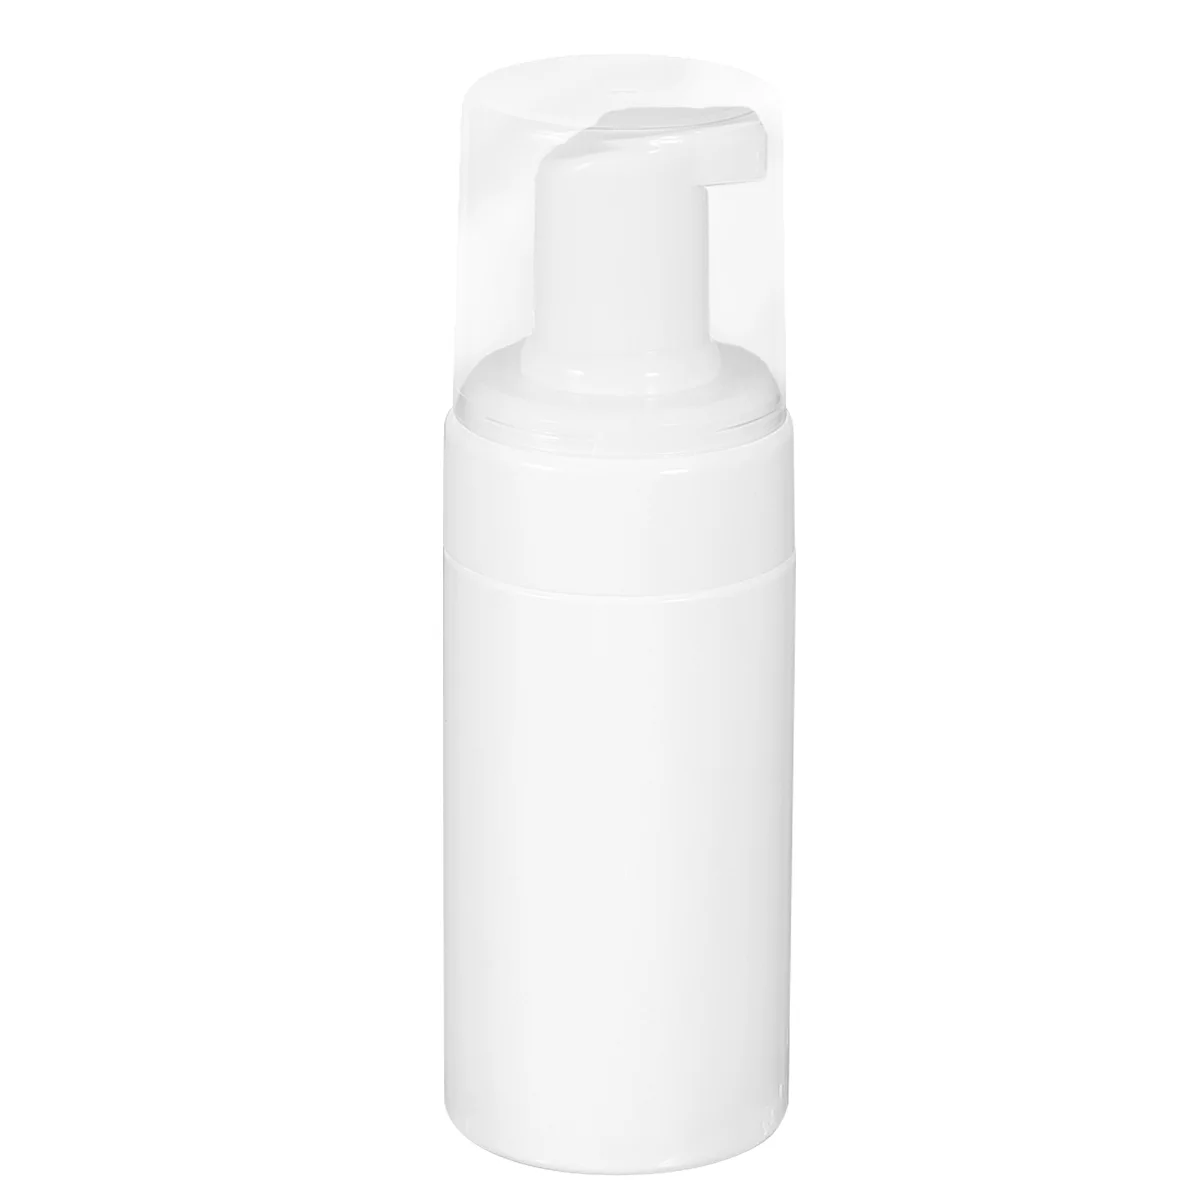 

4 Pcs Bottle Sub for Handwashing Fluid Liquid Soap Press Pump Dispensers